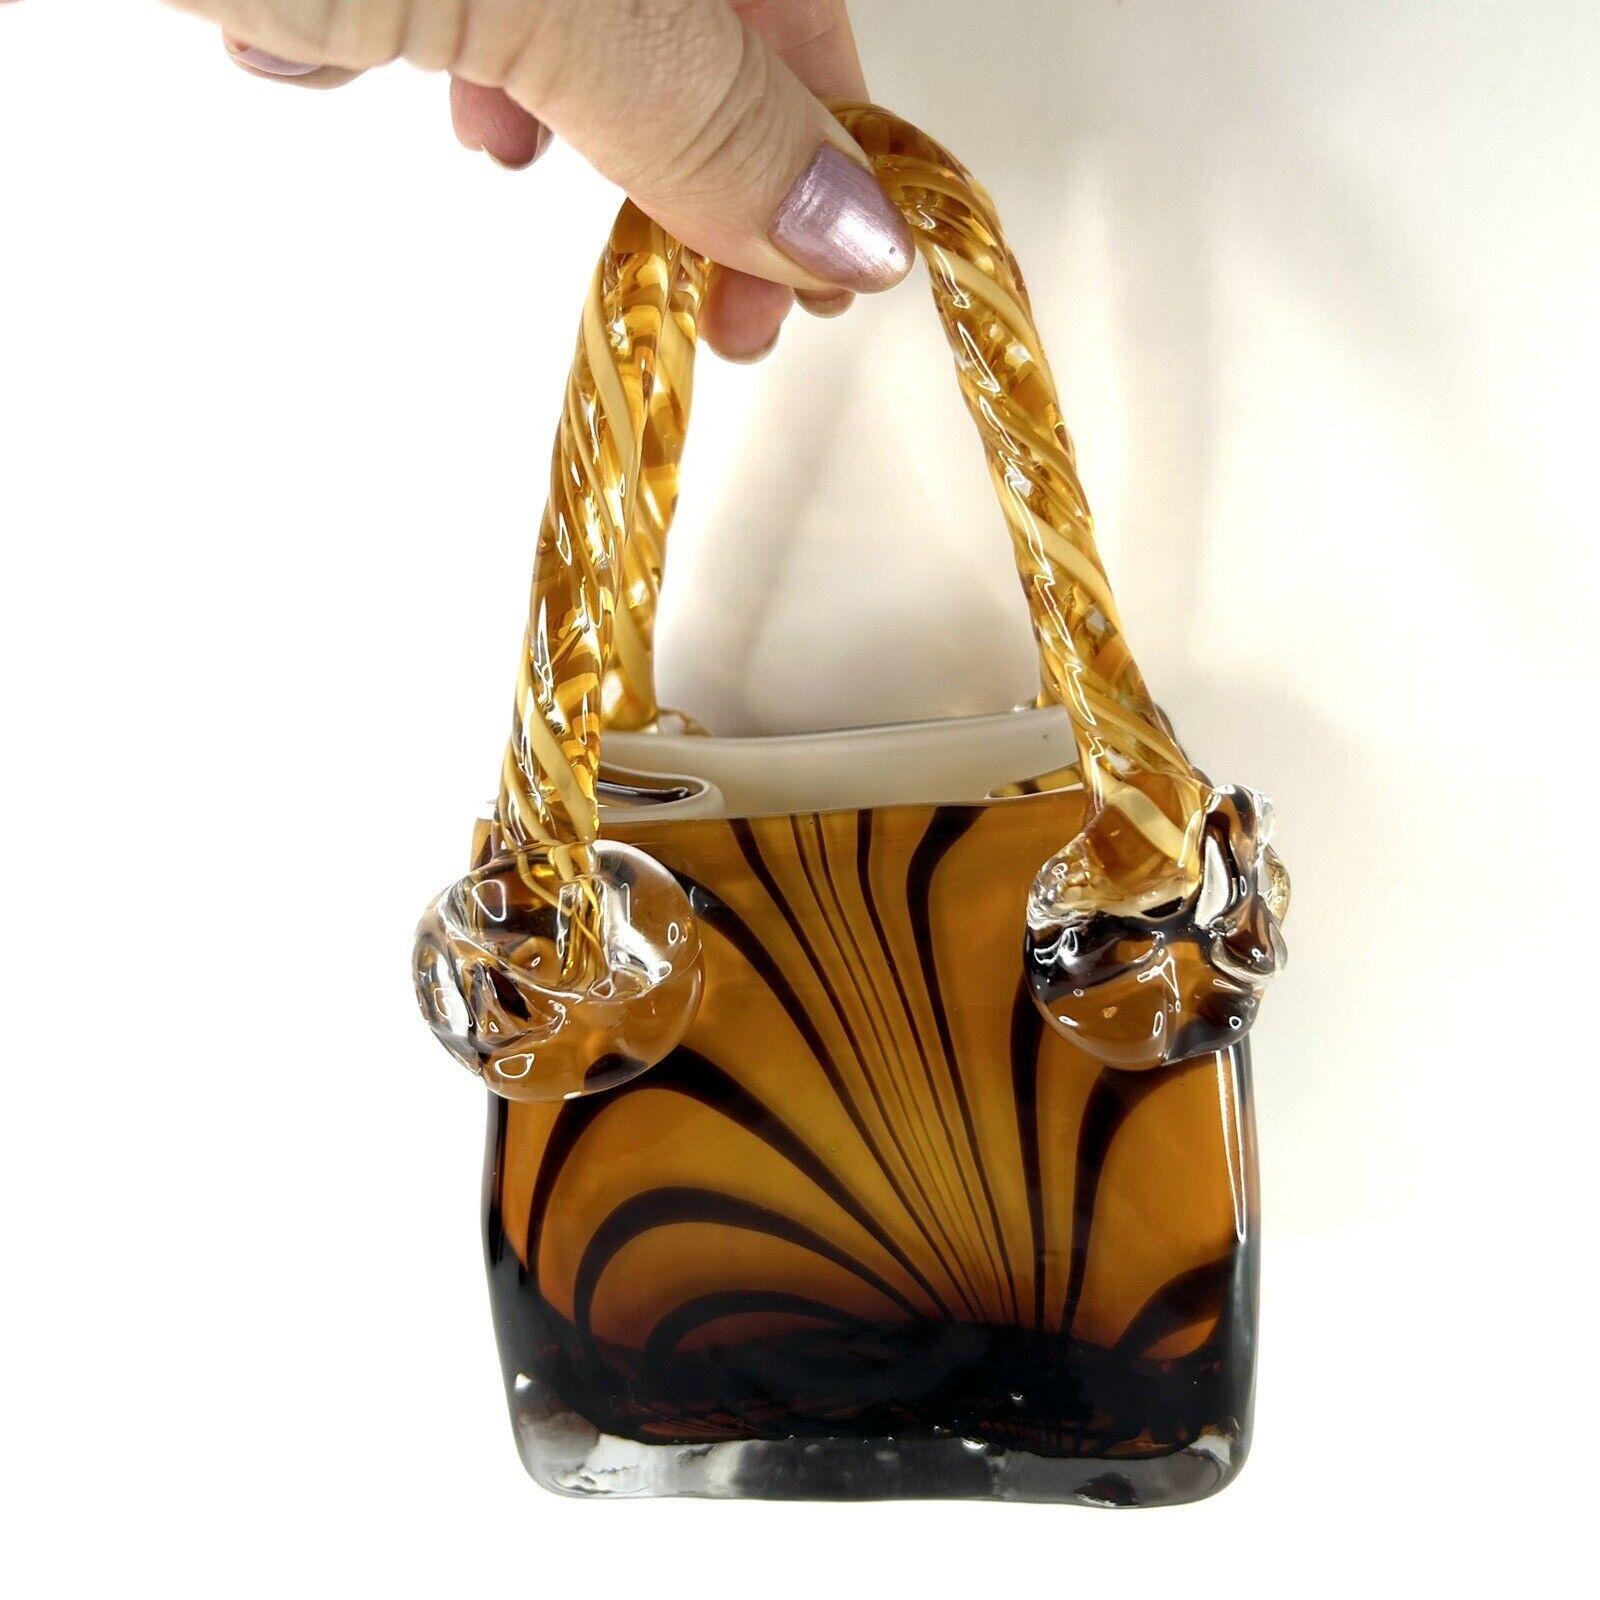 ART GLASS PURSE VASE Tiger Swirled Amber & Black Colour Home Decor Gift Trinkets